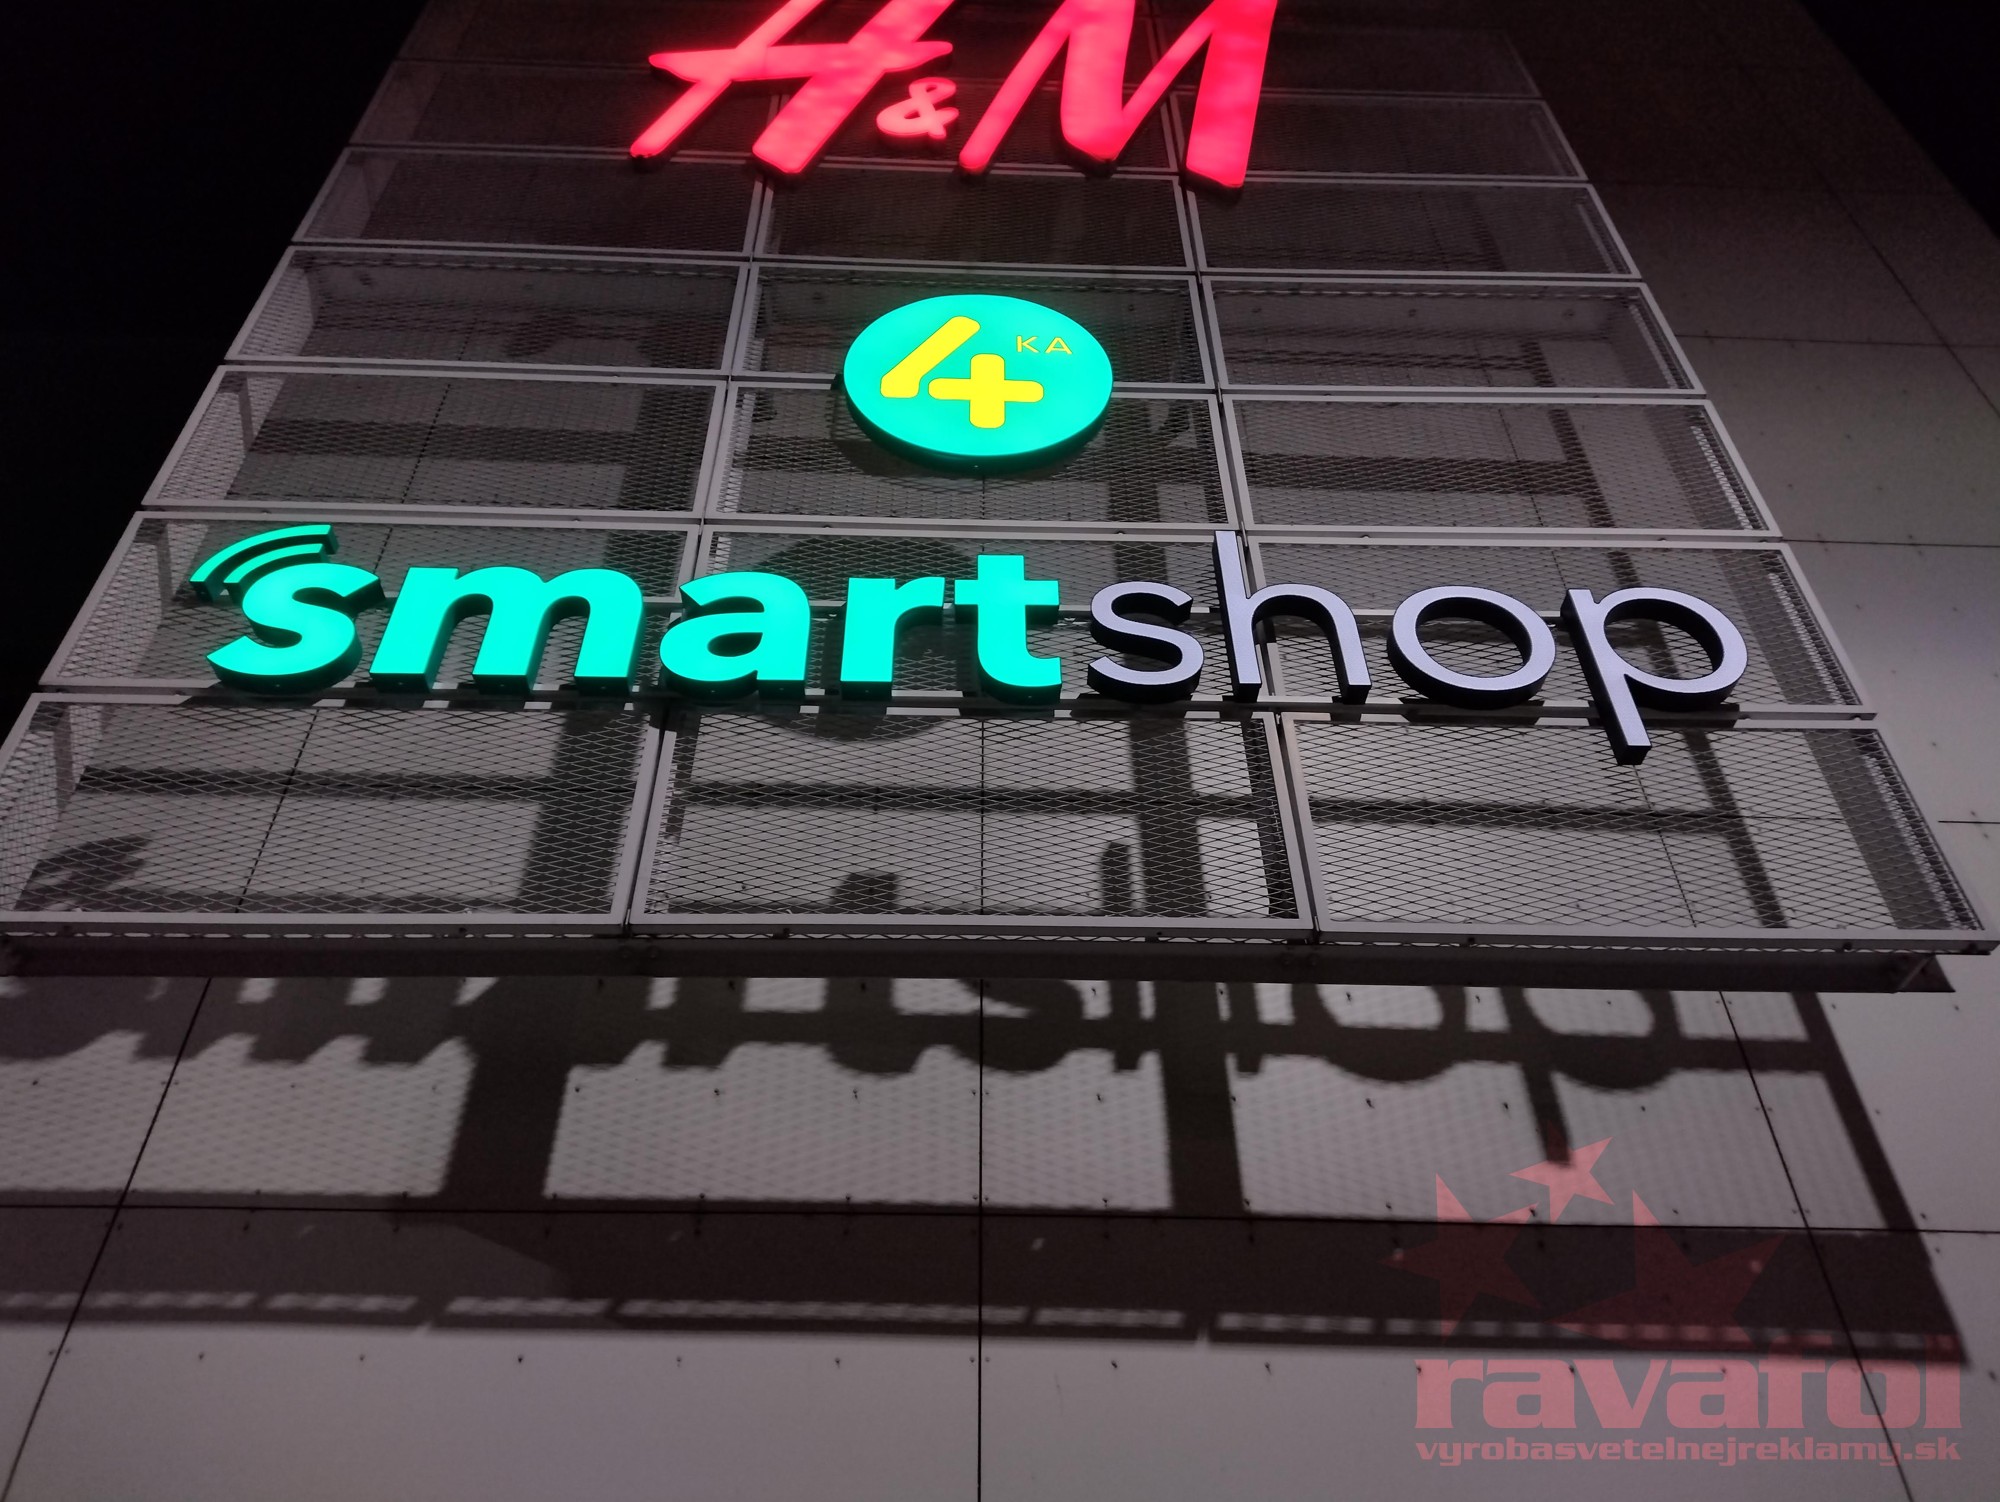 Smartshop 4KA 3D reklama ravafol